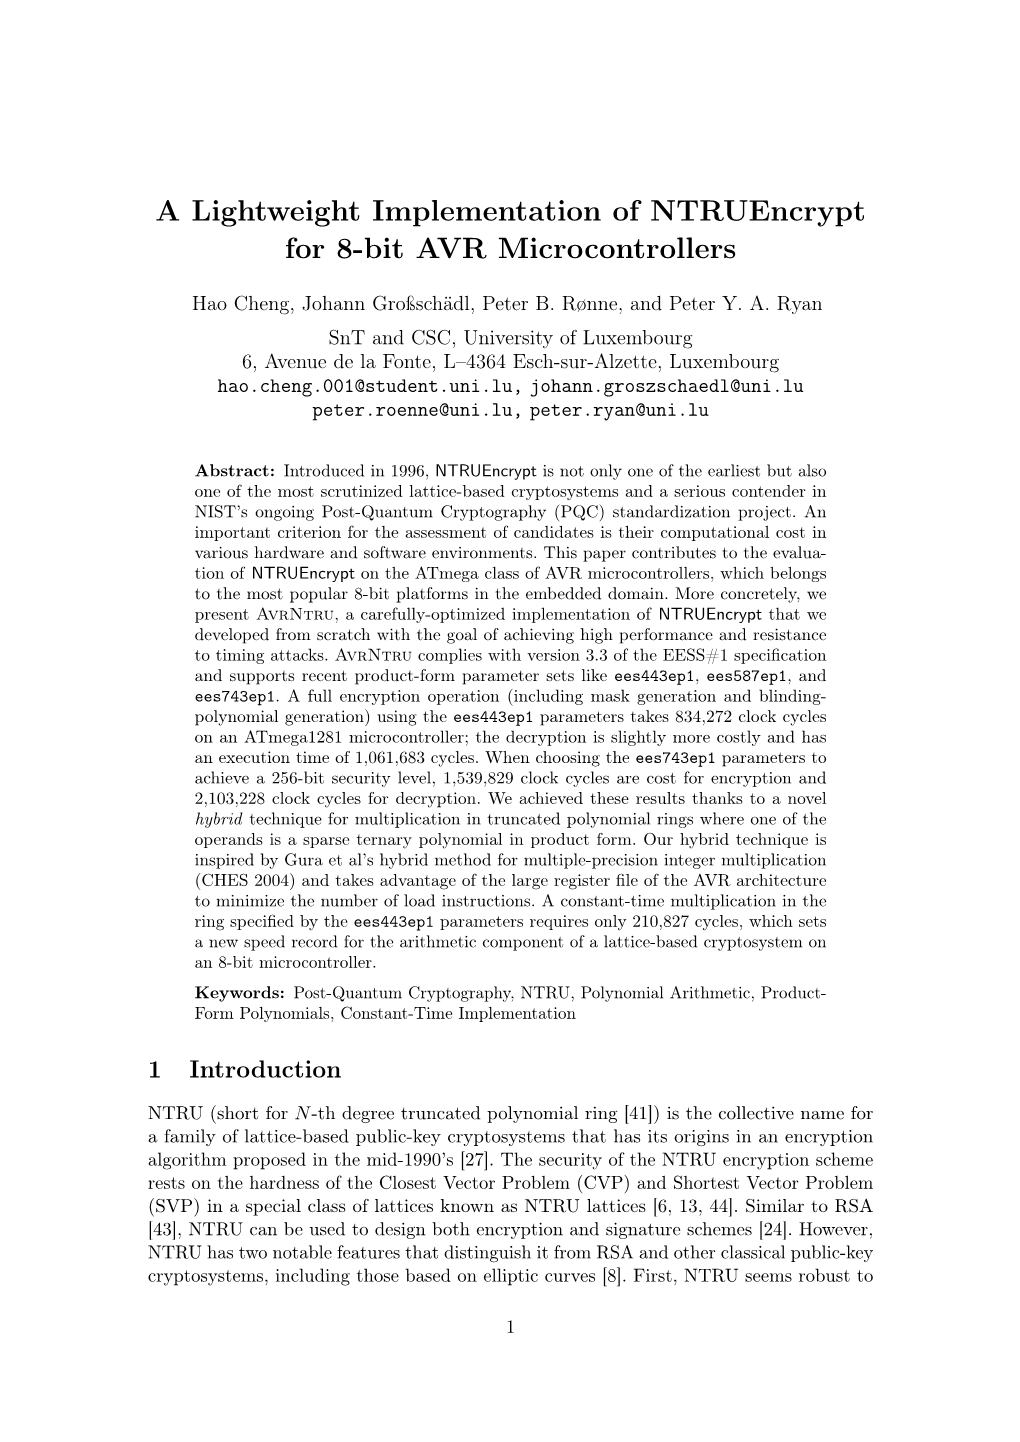 A Lightweight Implementation of Ntruencrypt for 8-Bit AVR Microcontrollers